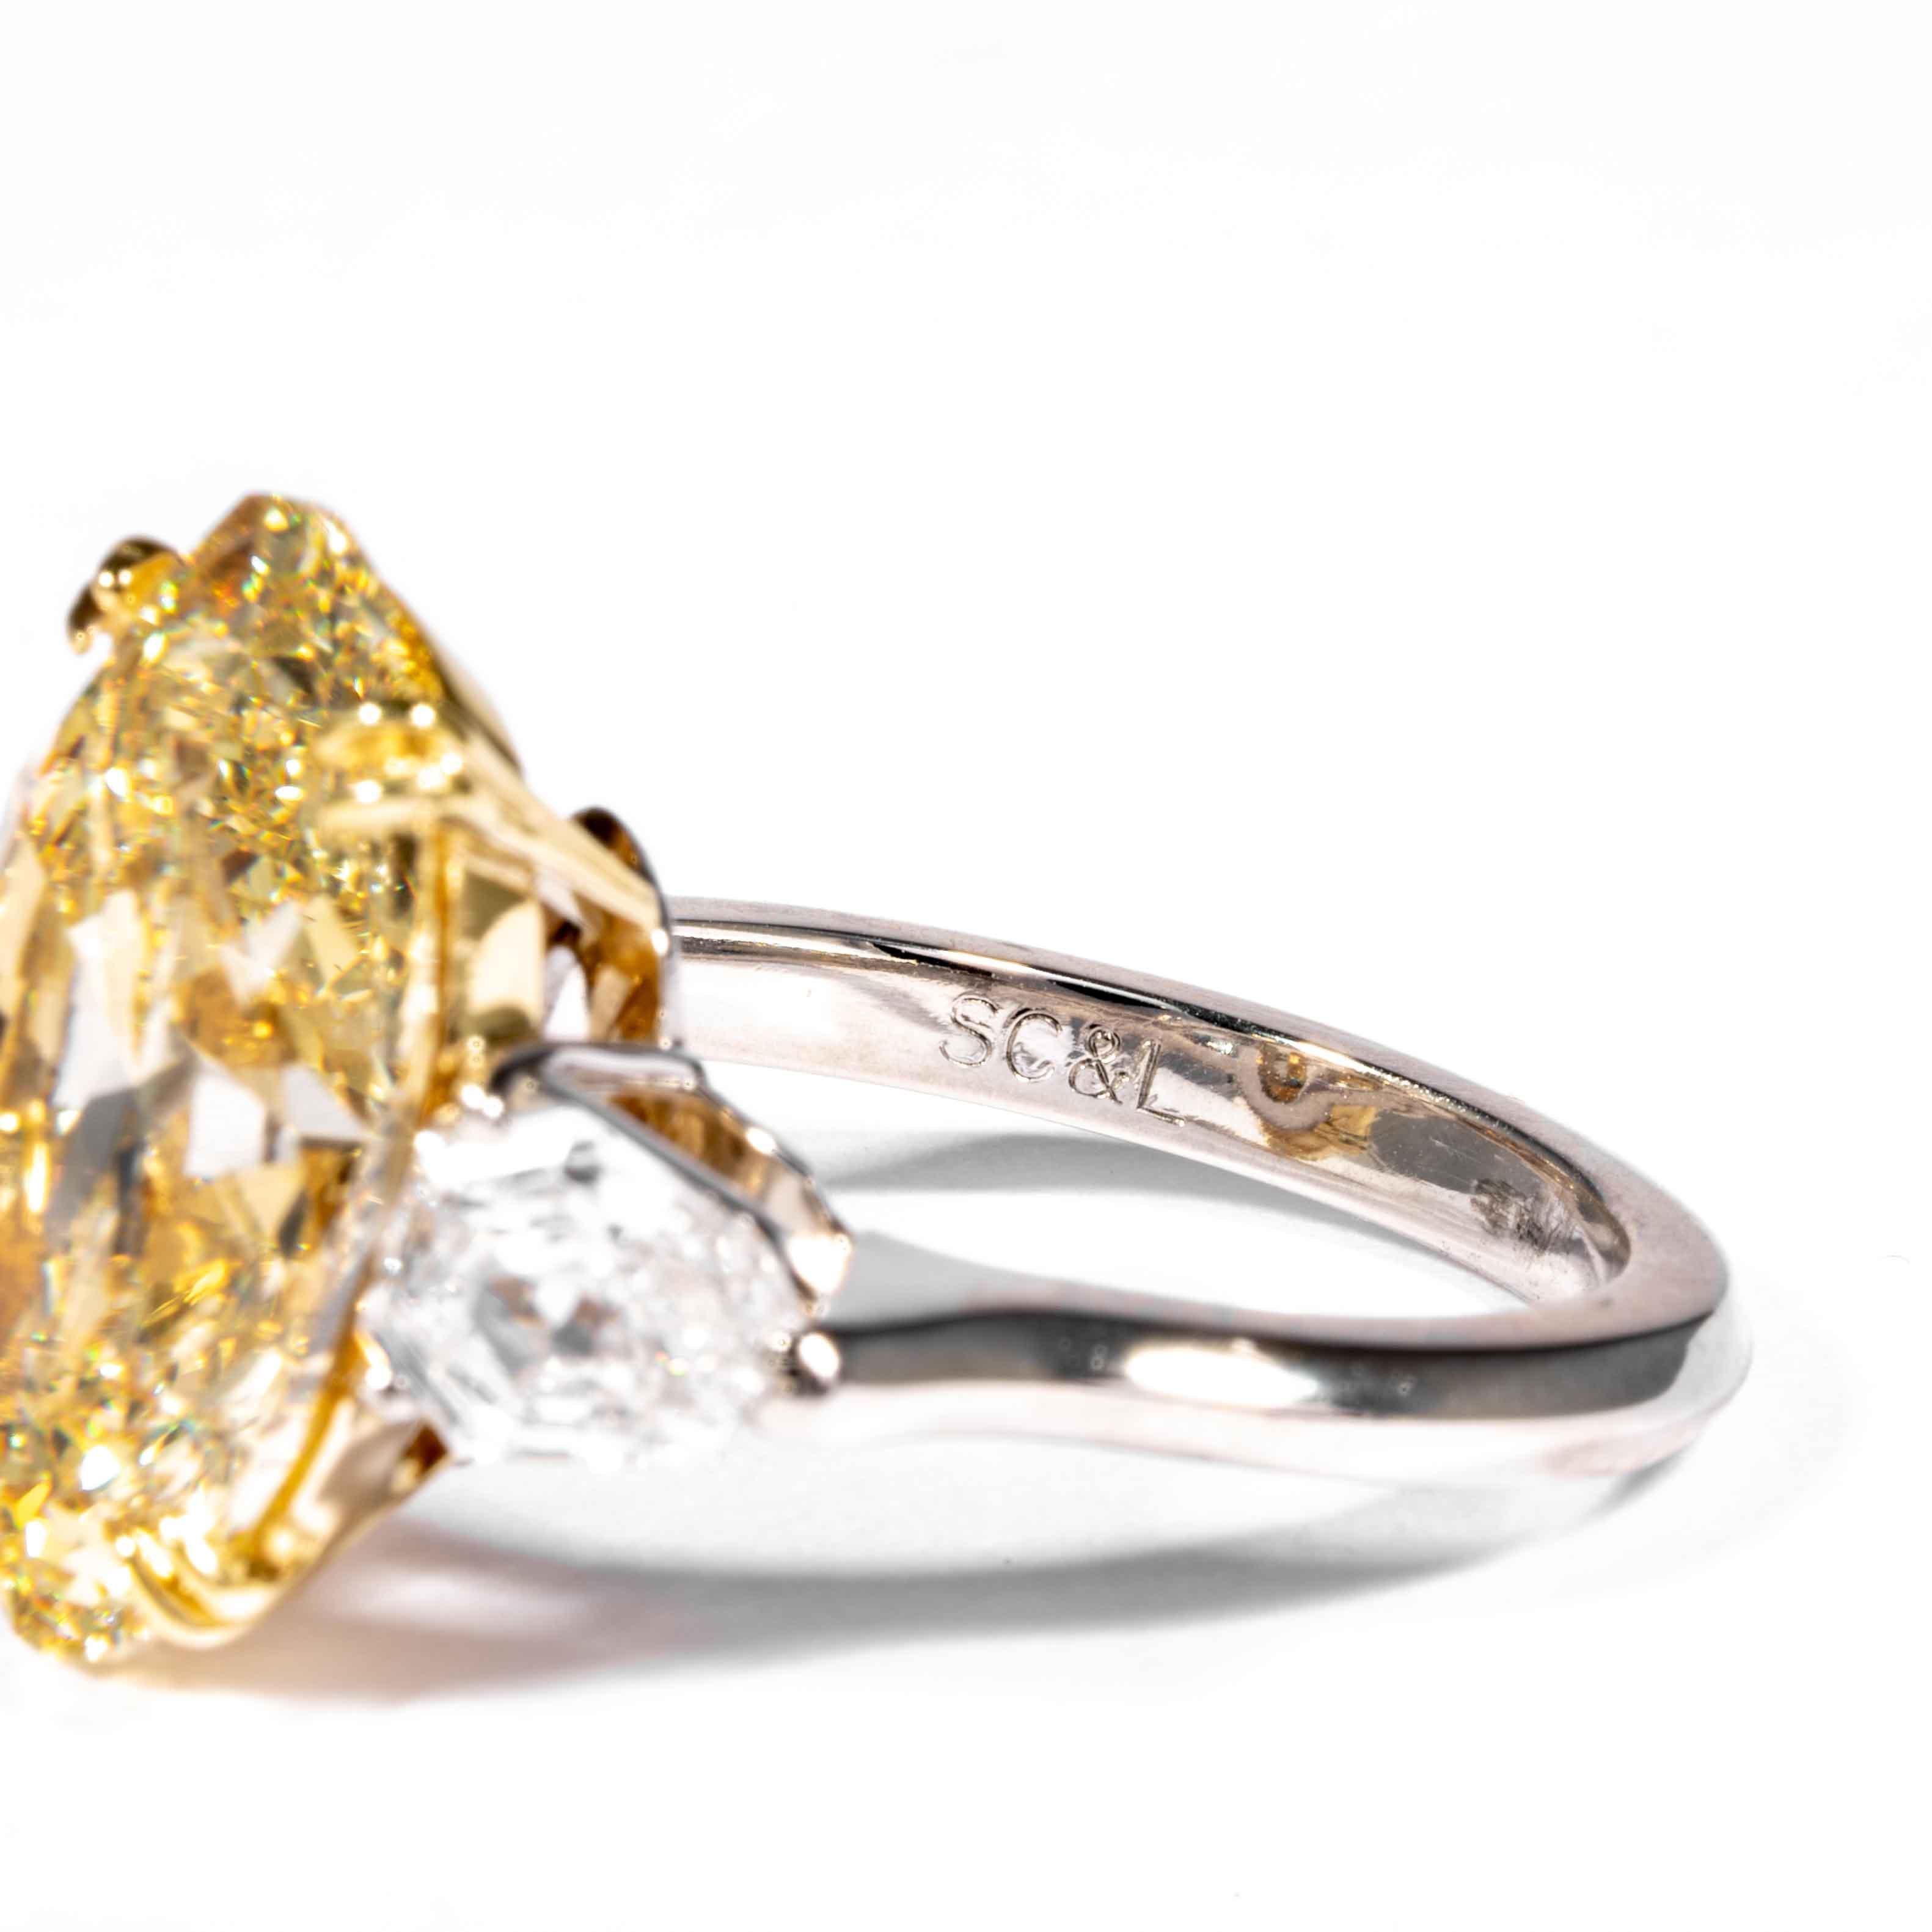 Women's Shreve, Crump & Low GIA Certified 10.09 Carat Fancy Yellow Oval Diamond Ring For Sale